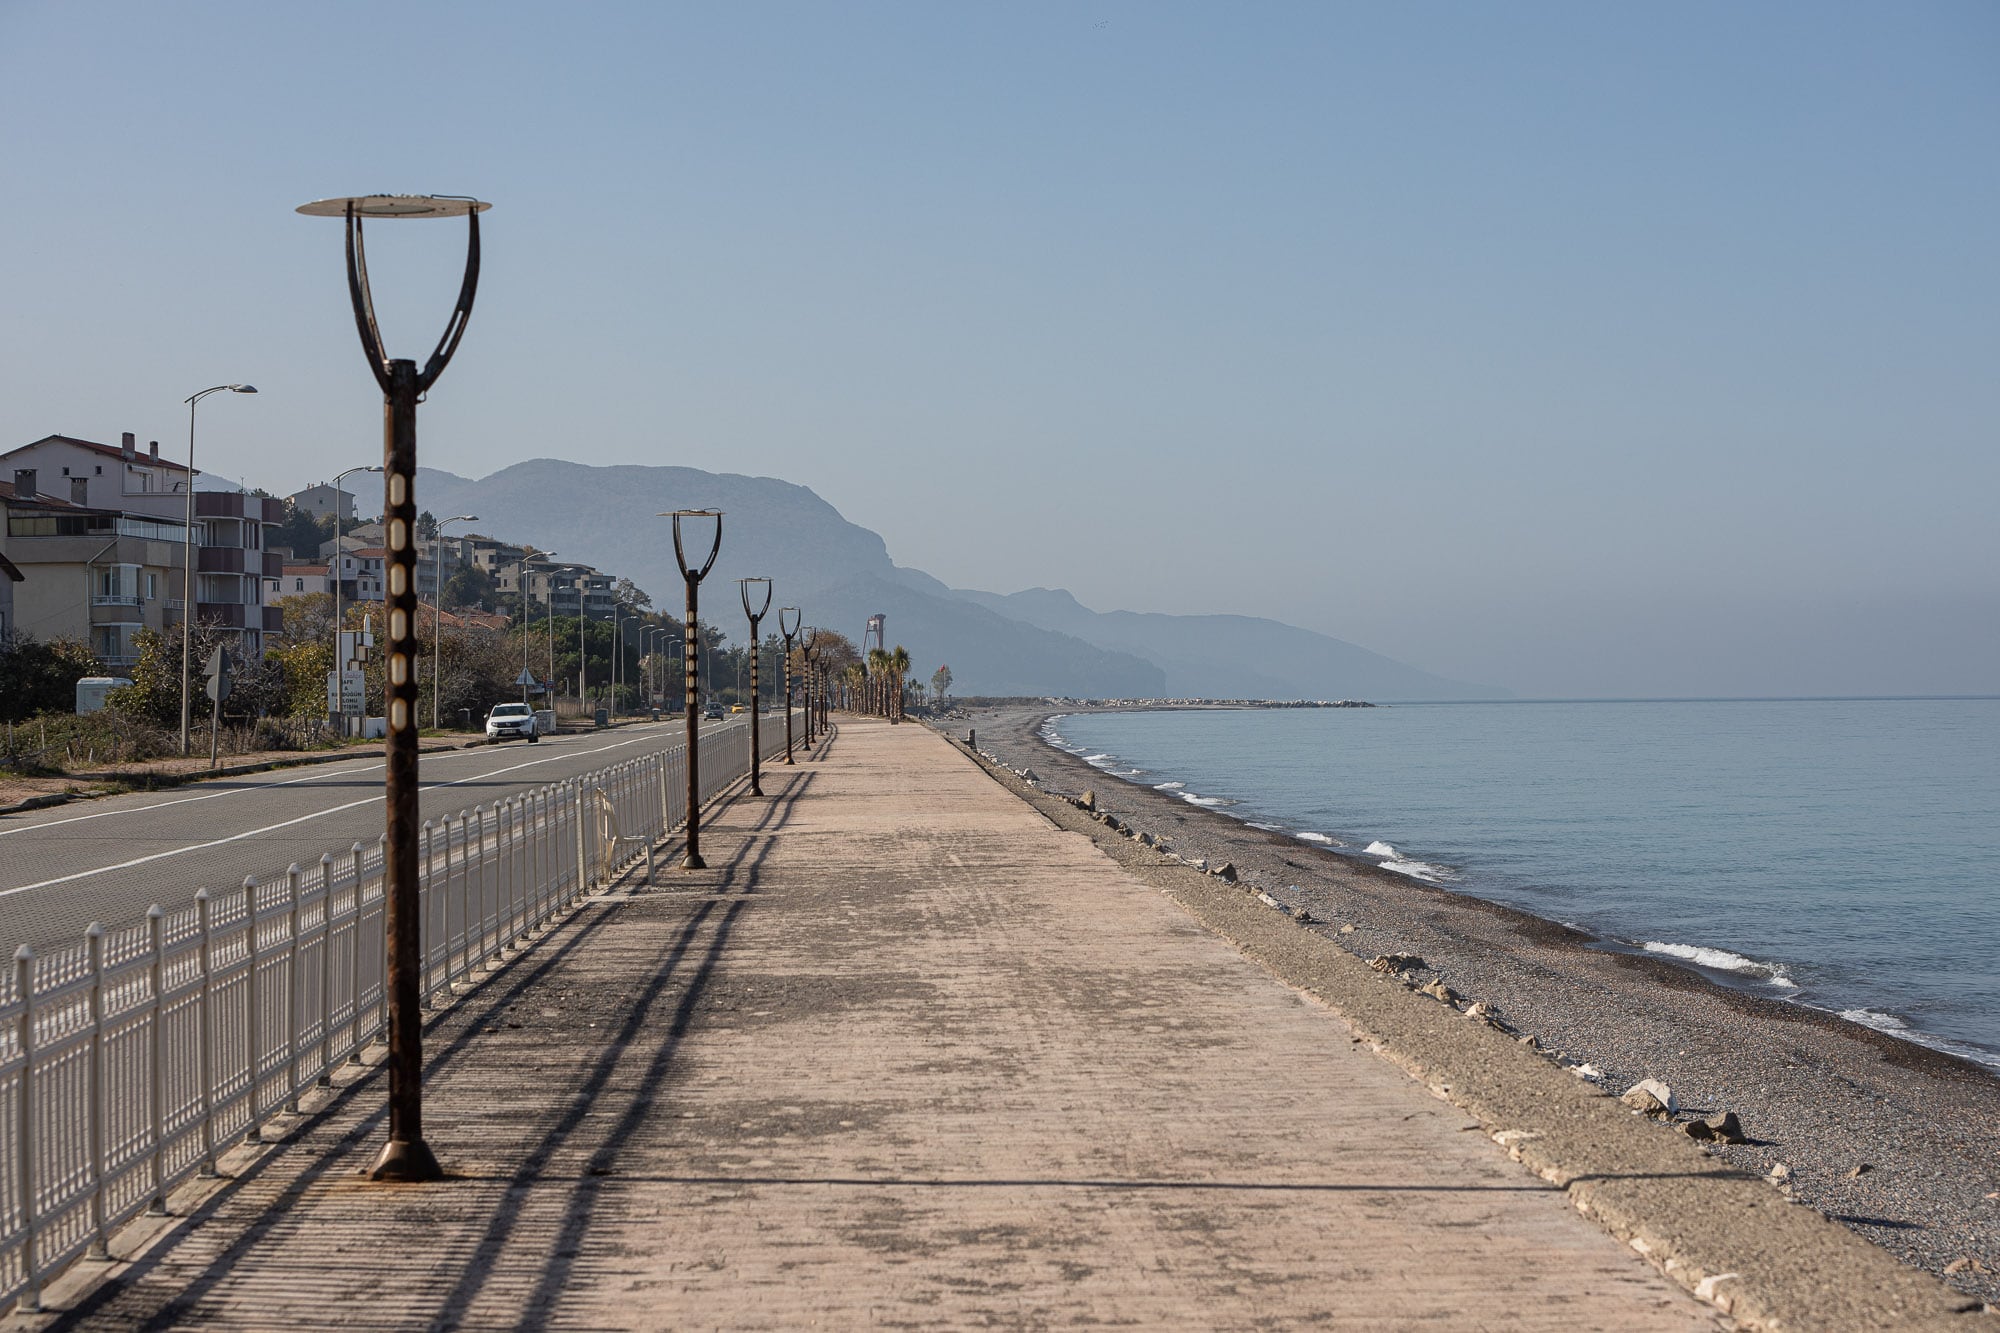 beach promenade to walk from Cide to Gideros